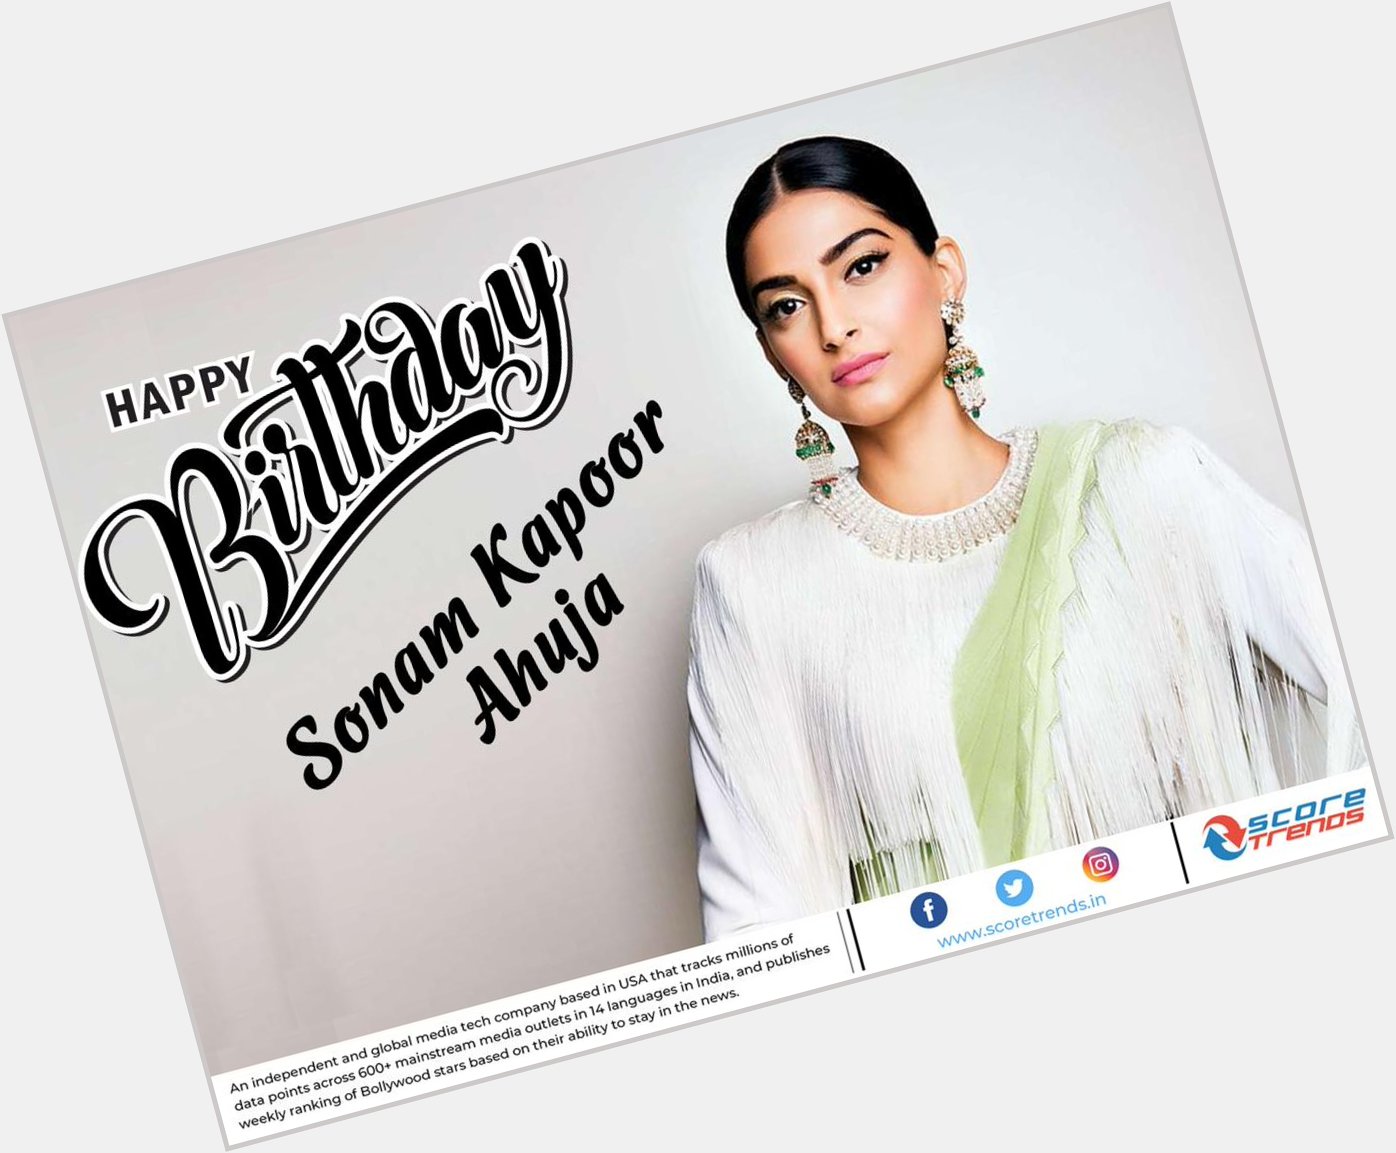 Score Trends wishes Sonam Kapoor Ahuja a Happy Birthday!! 